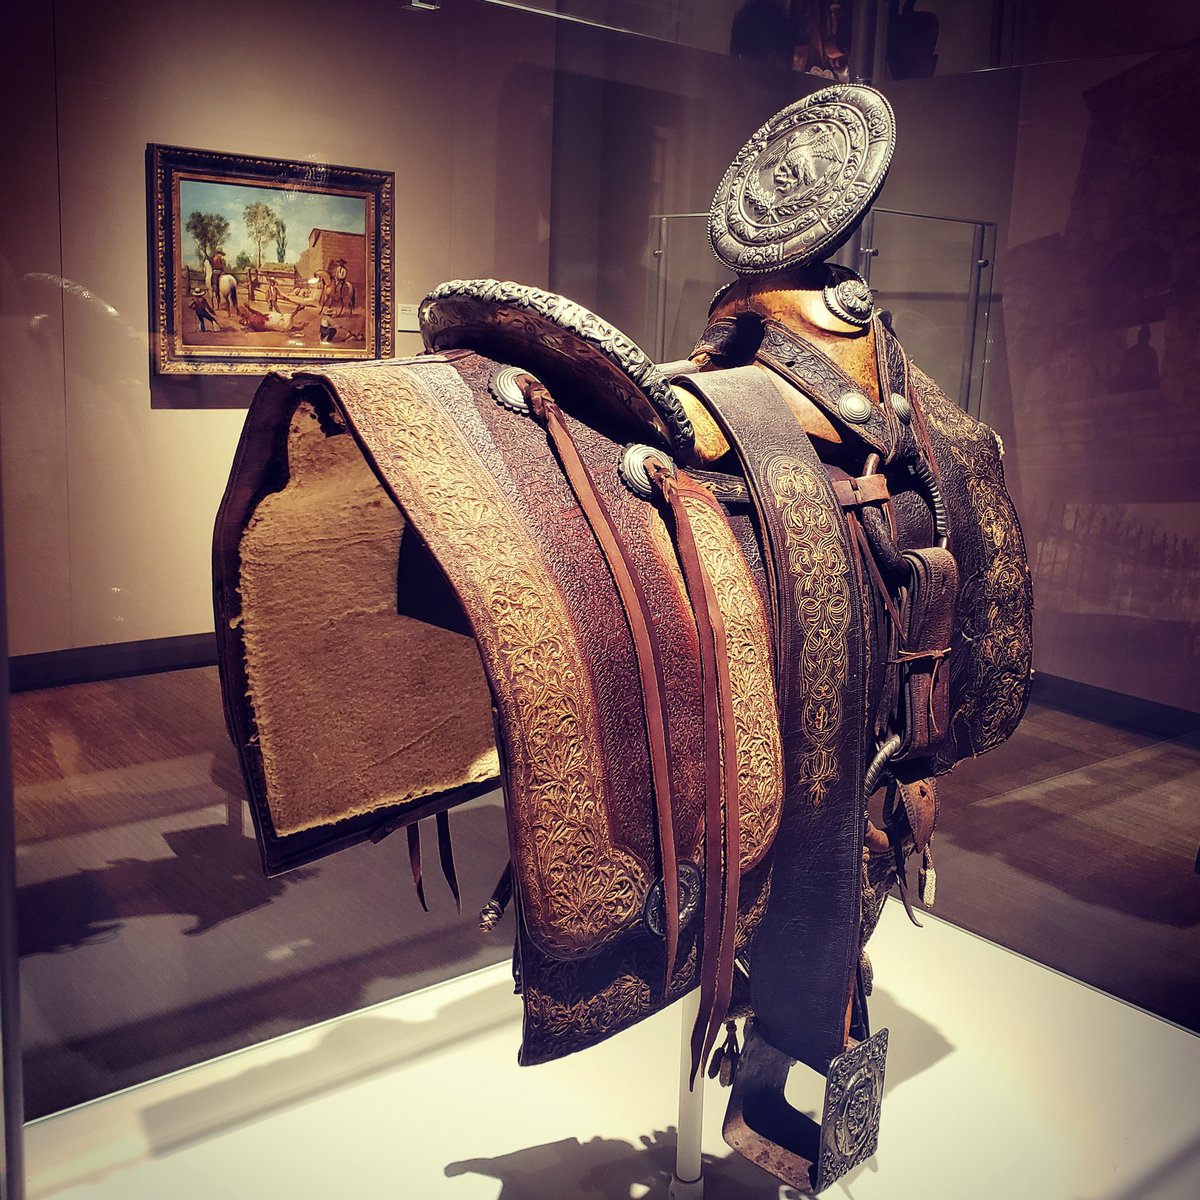 Silver horned saddle
Parades its etched artistry
Vintage tack display 
#haiku #briscoewesternartmuseum #vintage #saddle #sanantonio